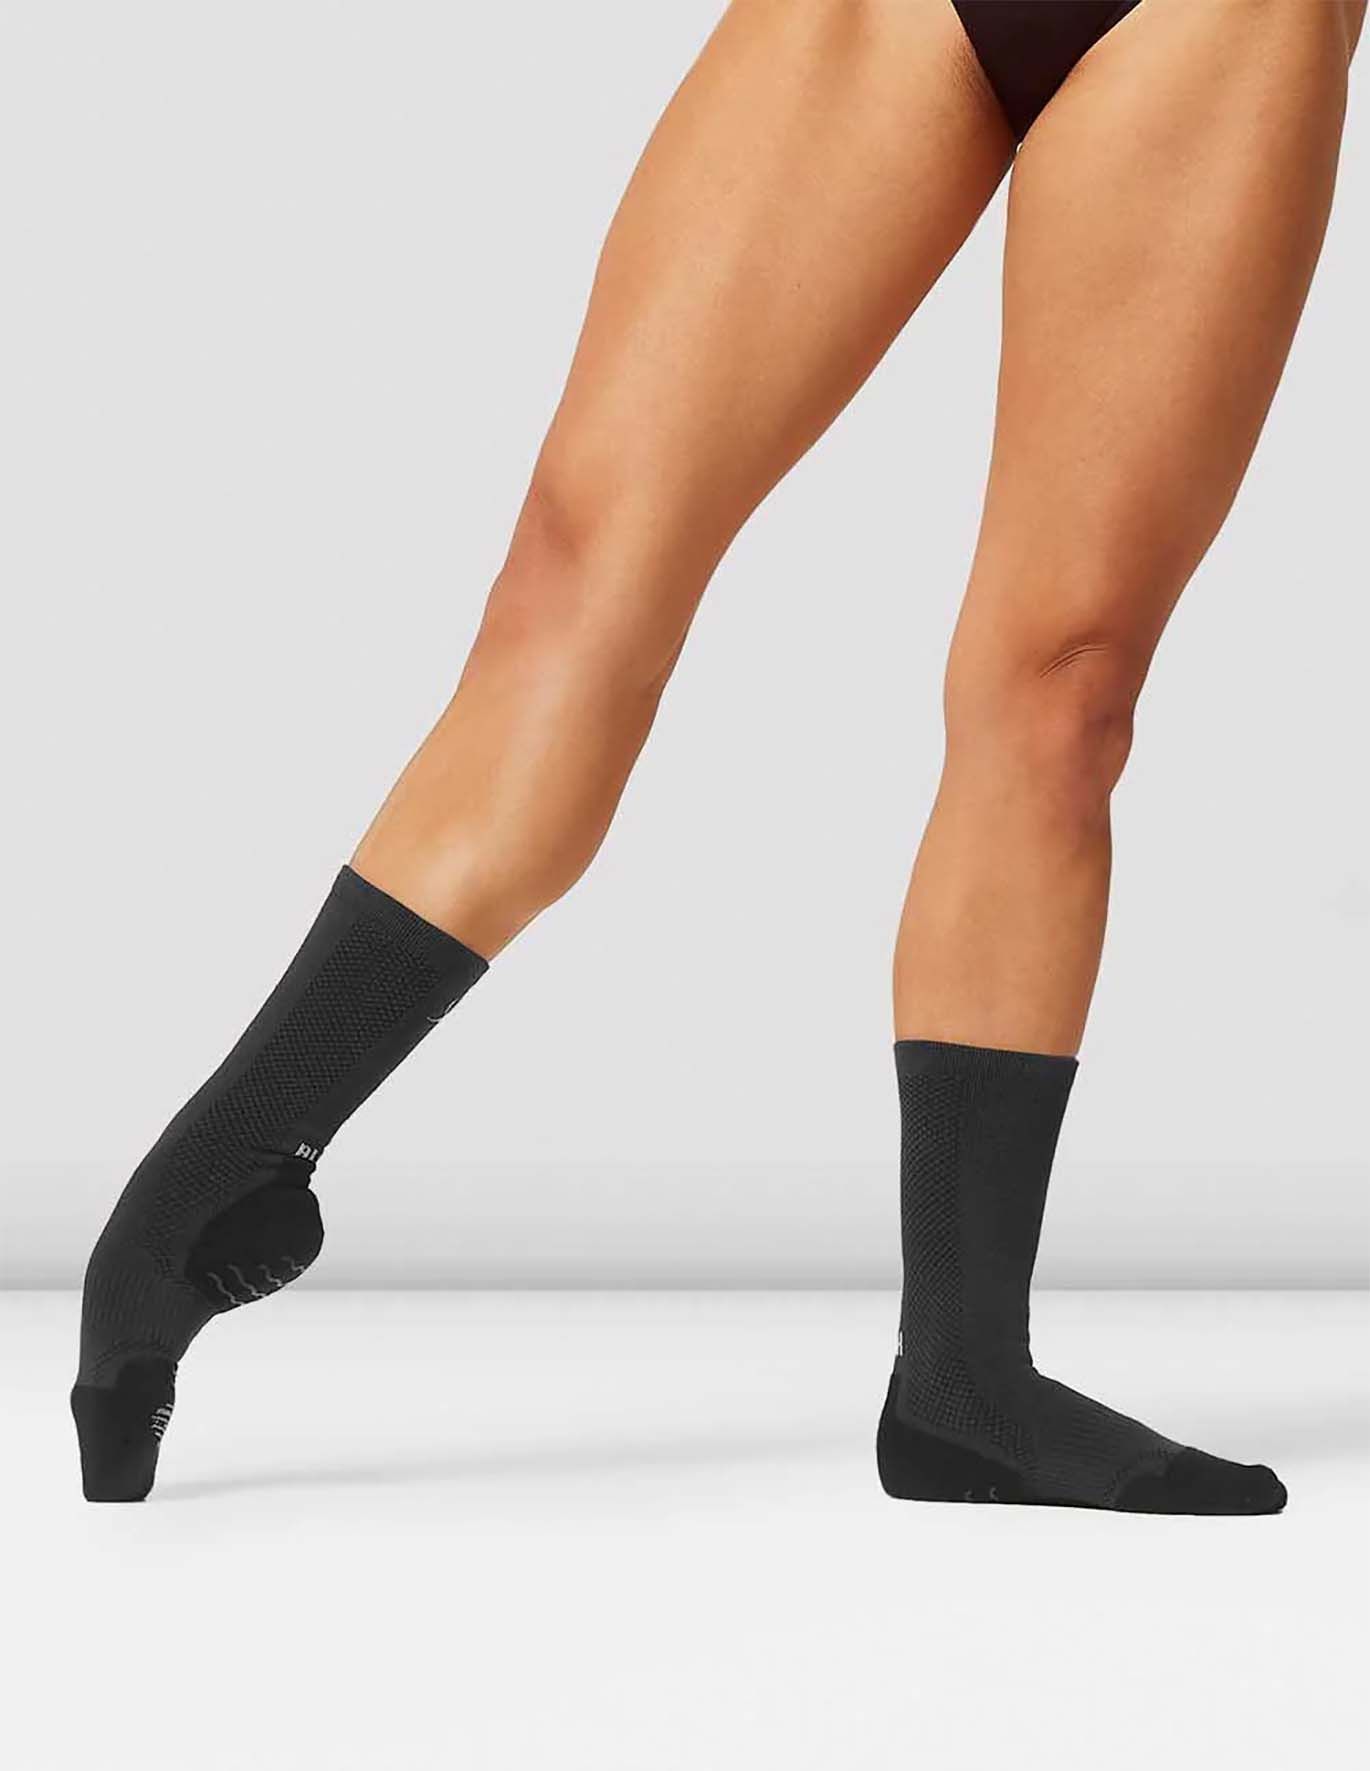 Women Stirrup Leg Warmers Boot Cuffs Socks Ballet Dance Socks Yoga Latin  Boot Cuffs Socks for Women and Girls 